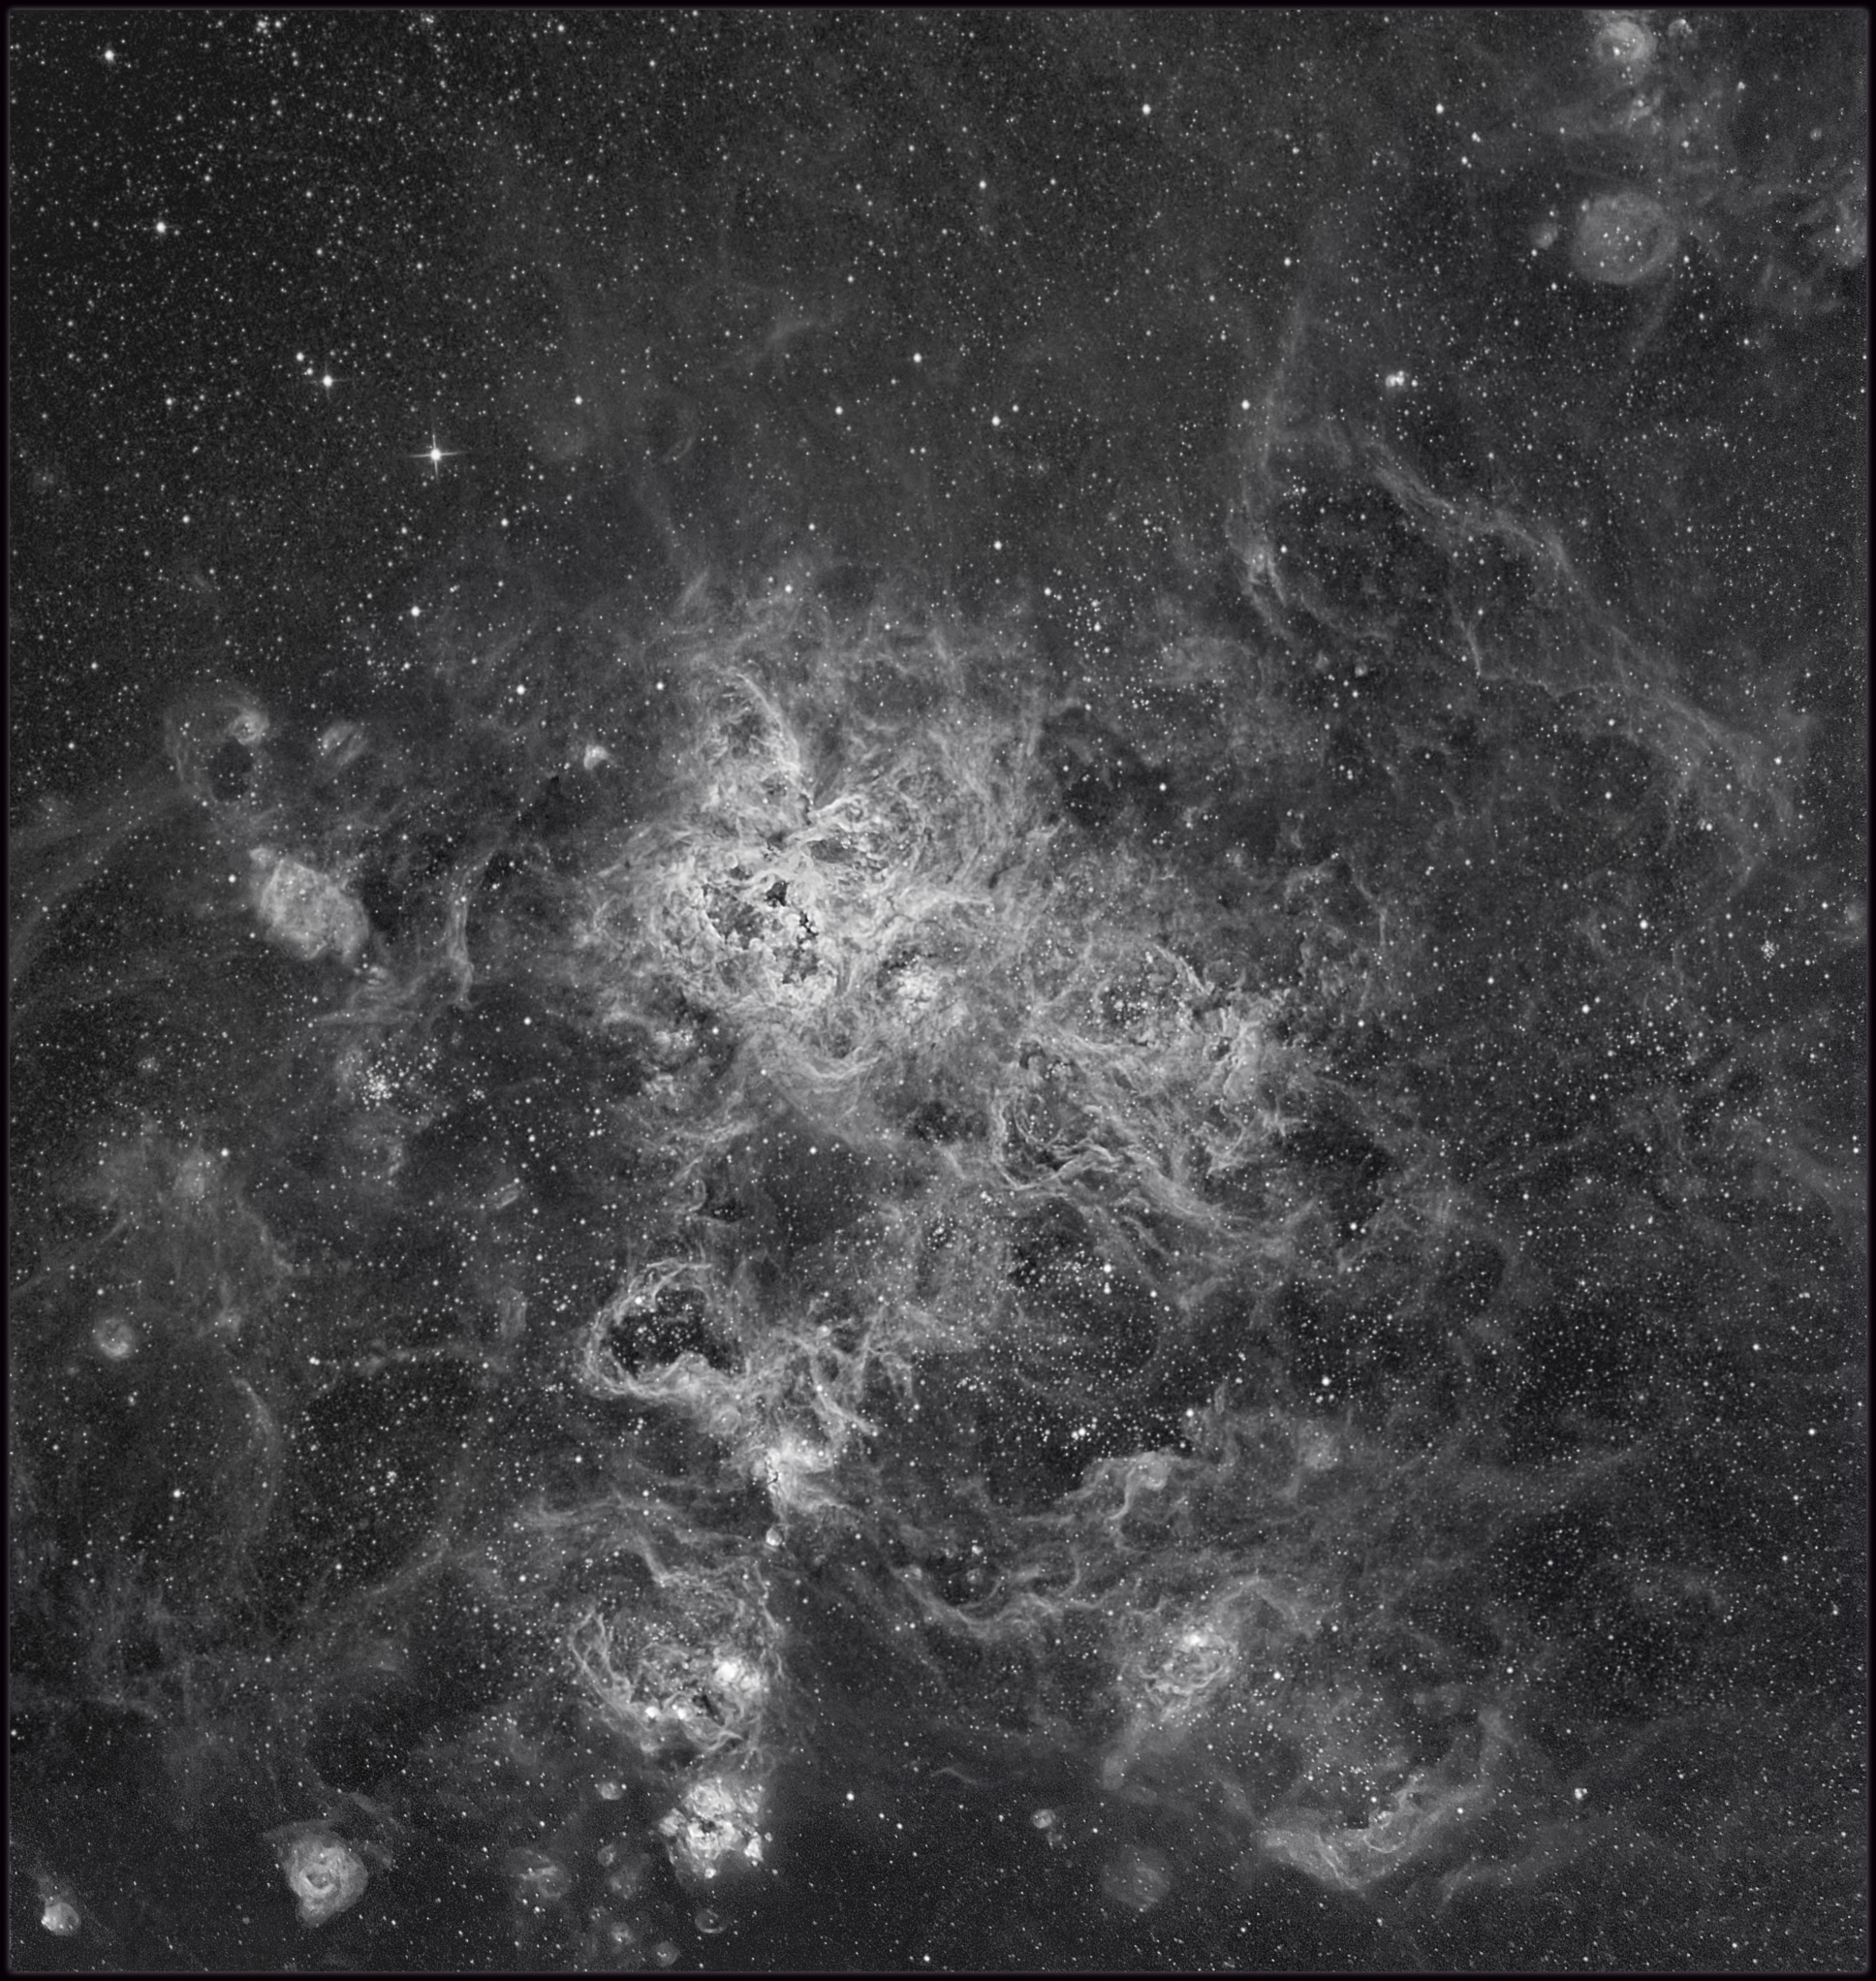 The Tarantula nebula Ha only